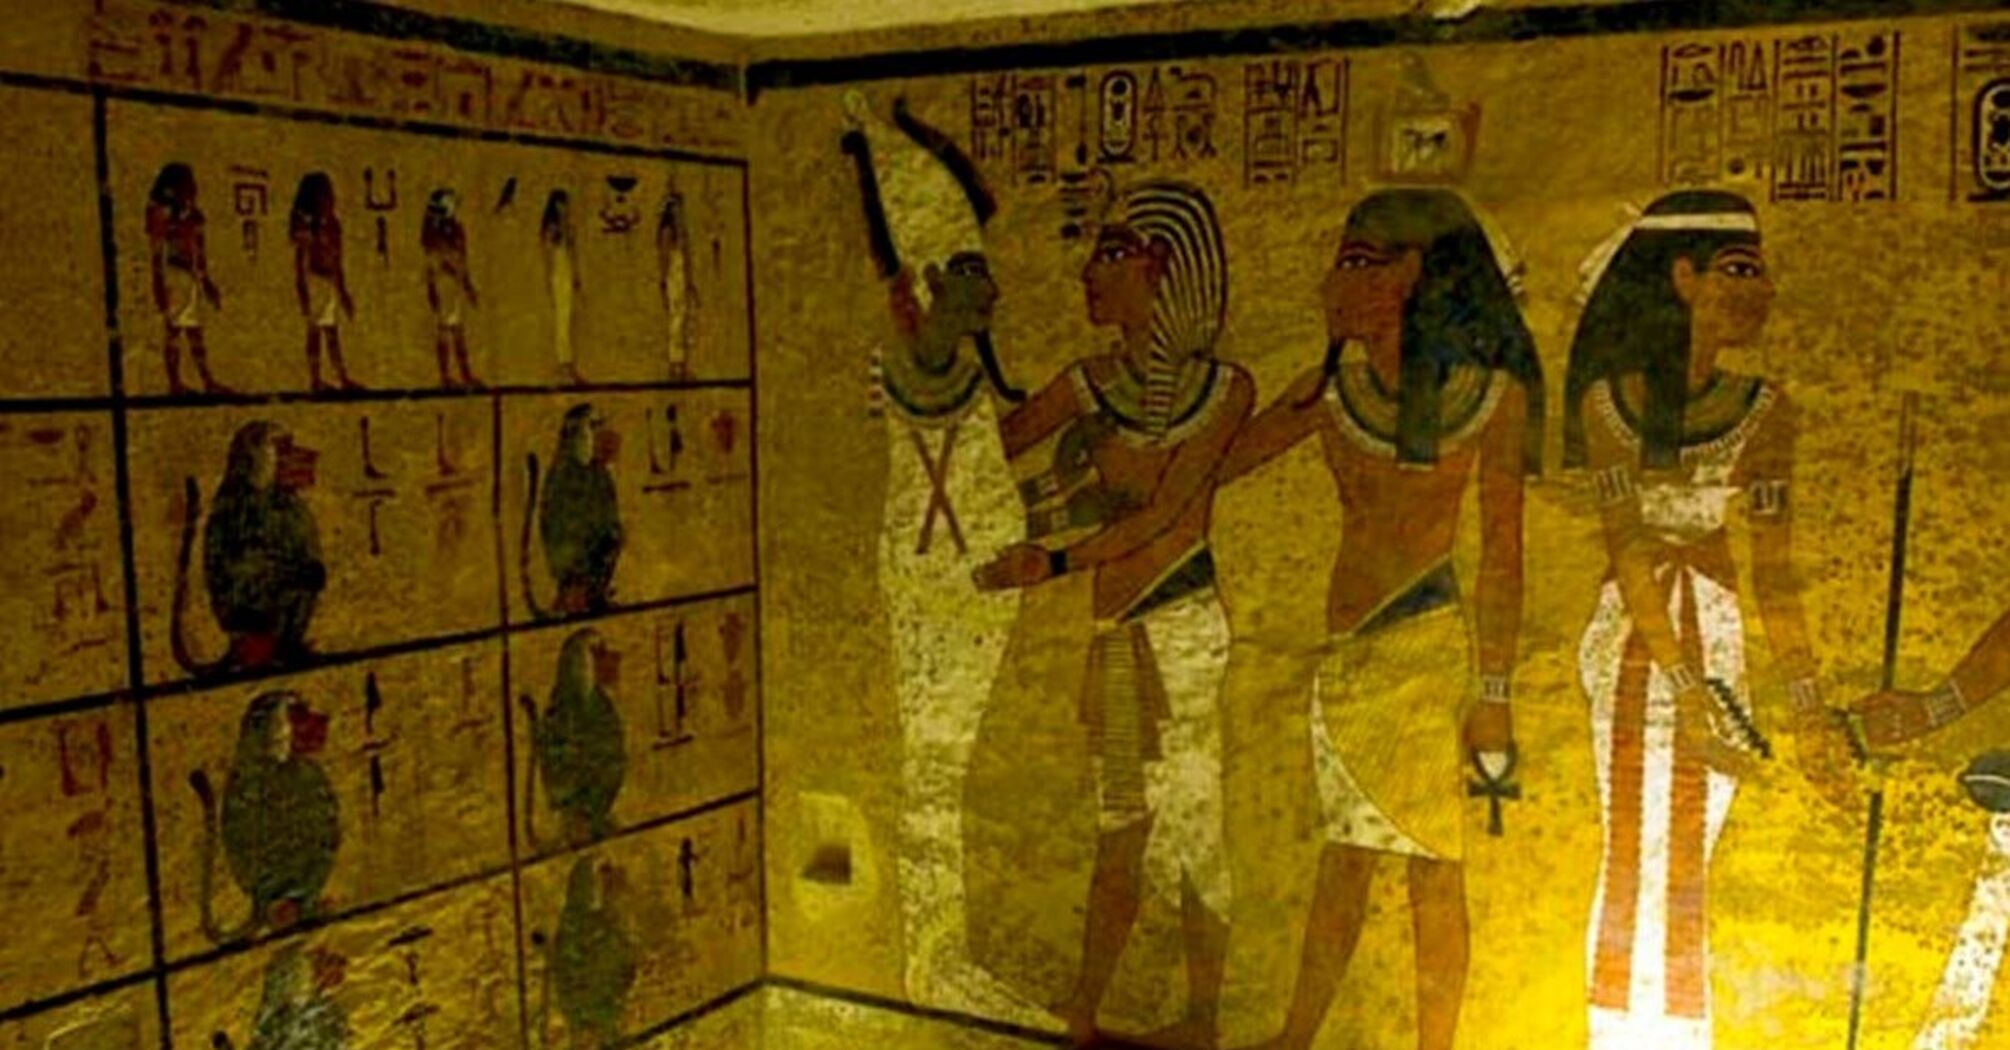 The curse of the pharaoh